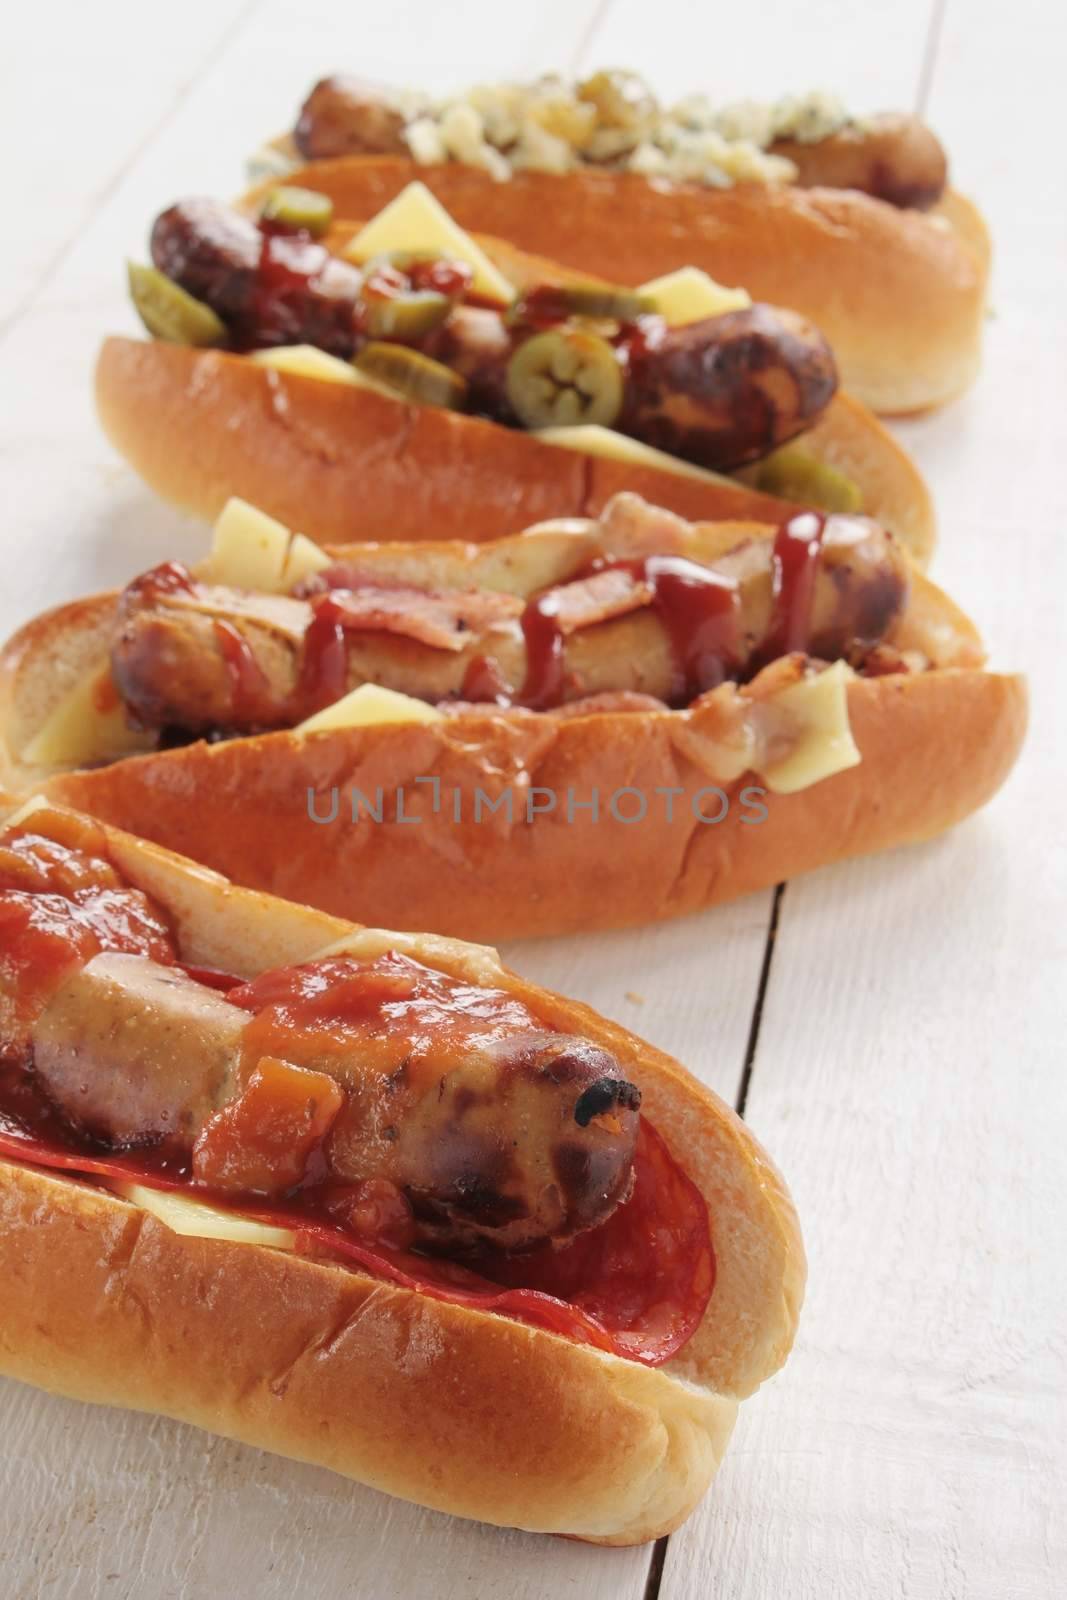 hotdog selection by neil_langan